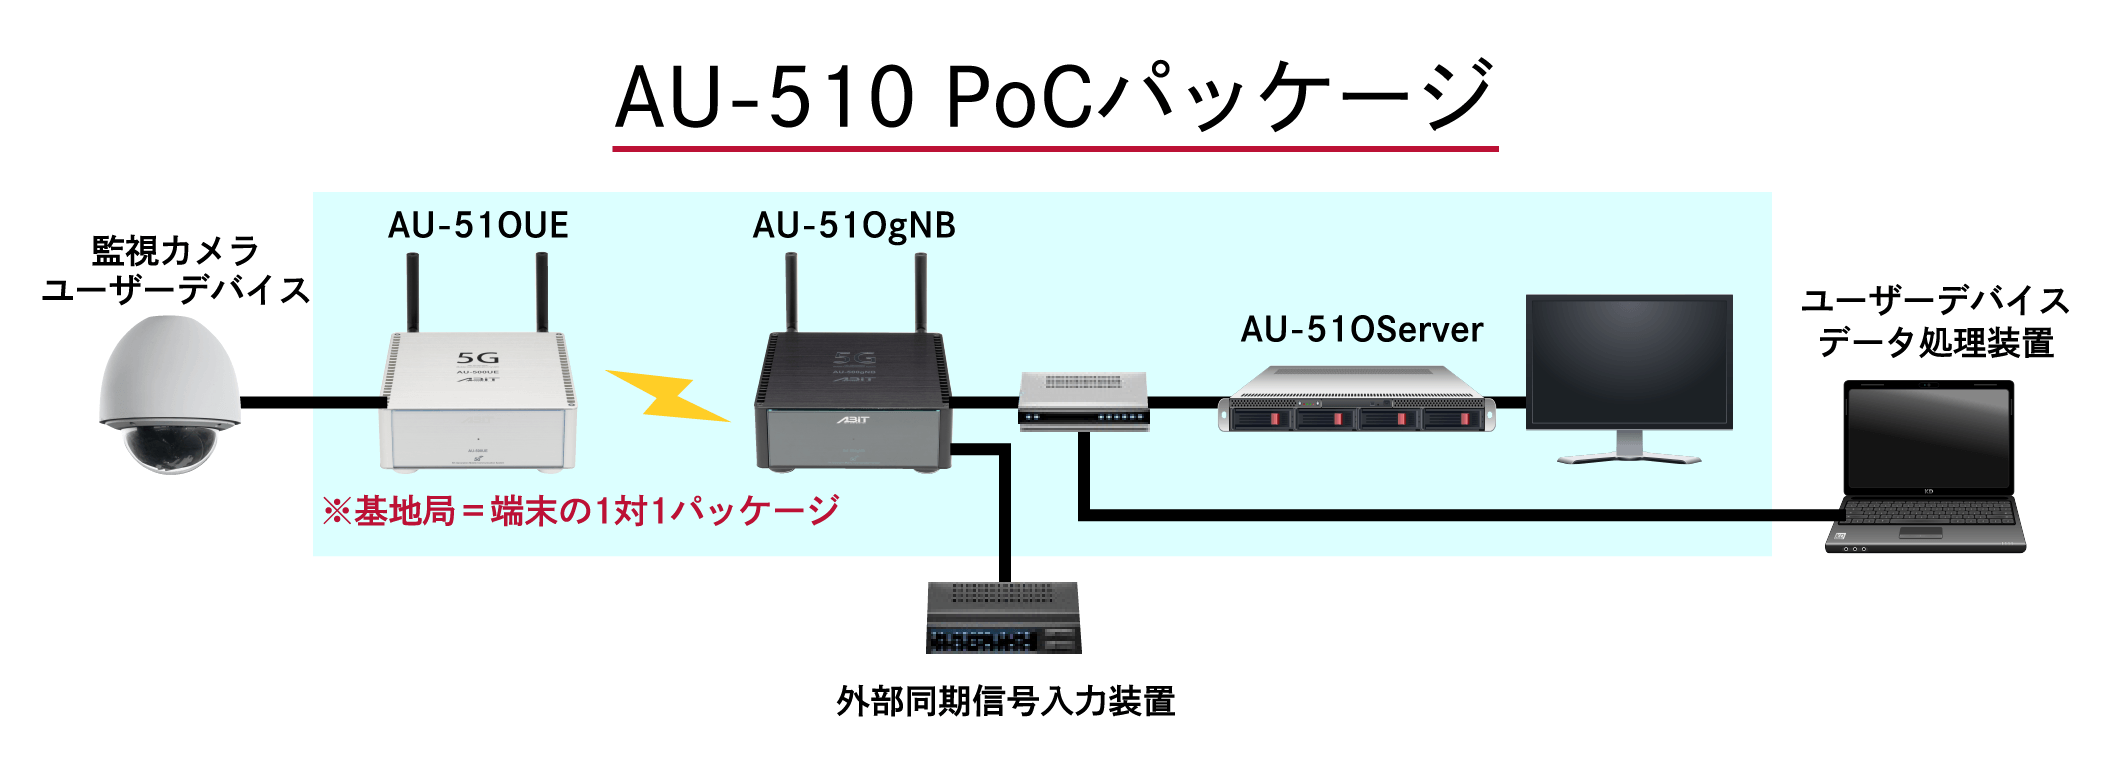 AU-510 PoCパッケージ